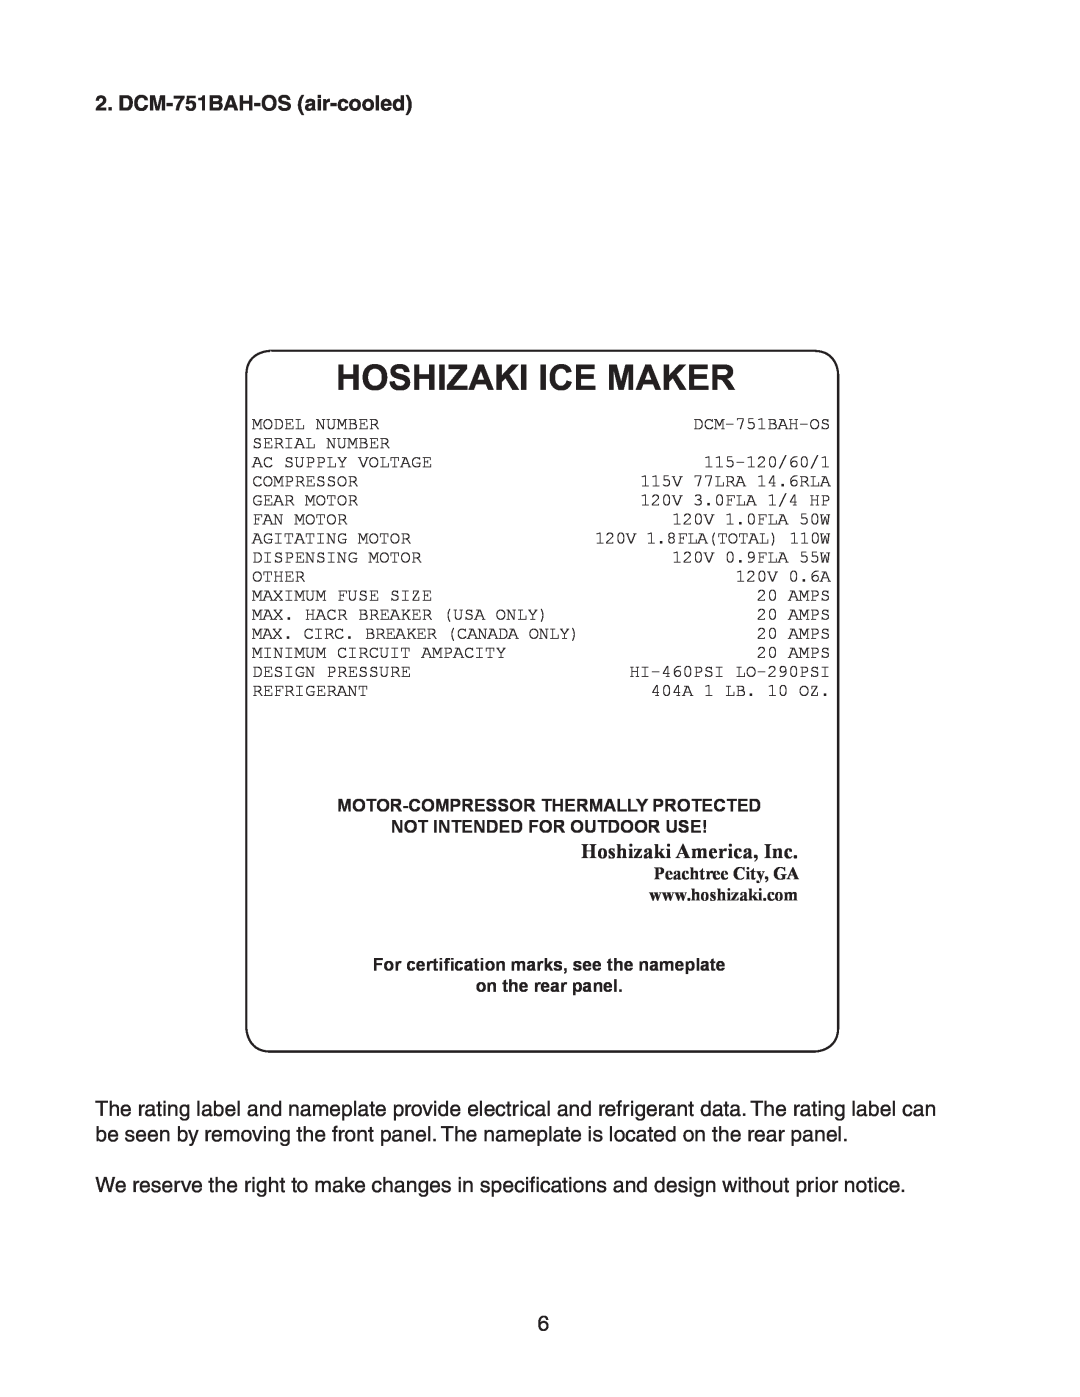 Hoshizaki DCM-751BAH(-OS), DCM-751BWH(-OS) DCM-751BAH-OS air-cooled, Hoshizaki Ice Maker, Hoshizaki America, Inc 